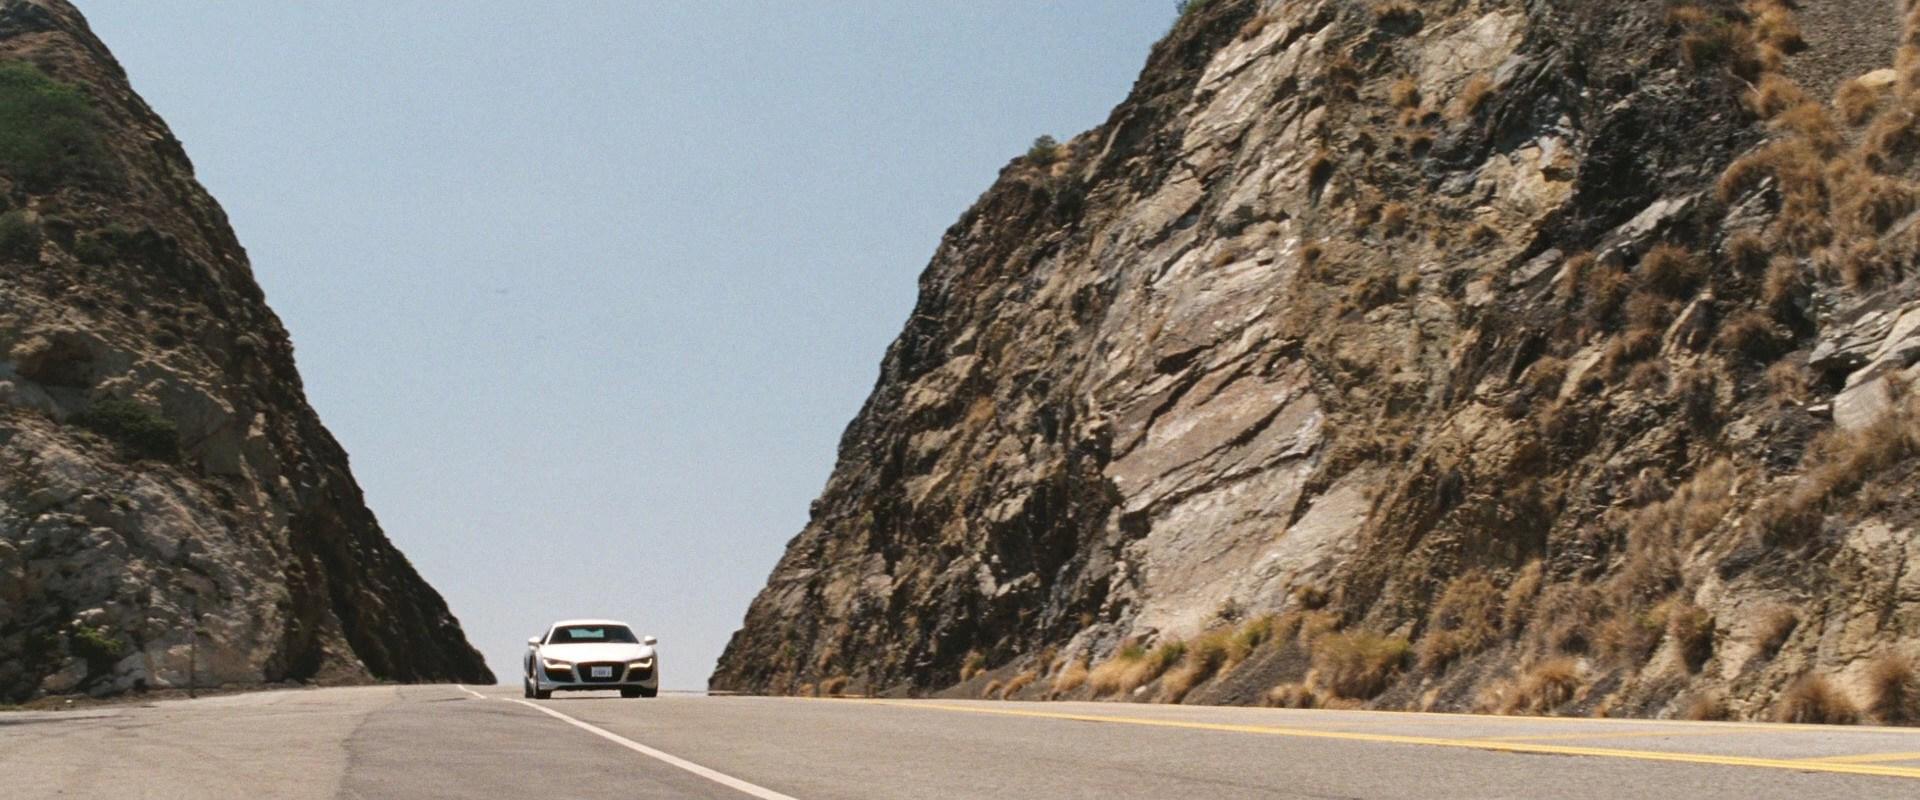 Iron Man Filming Locations | Malibu Highway